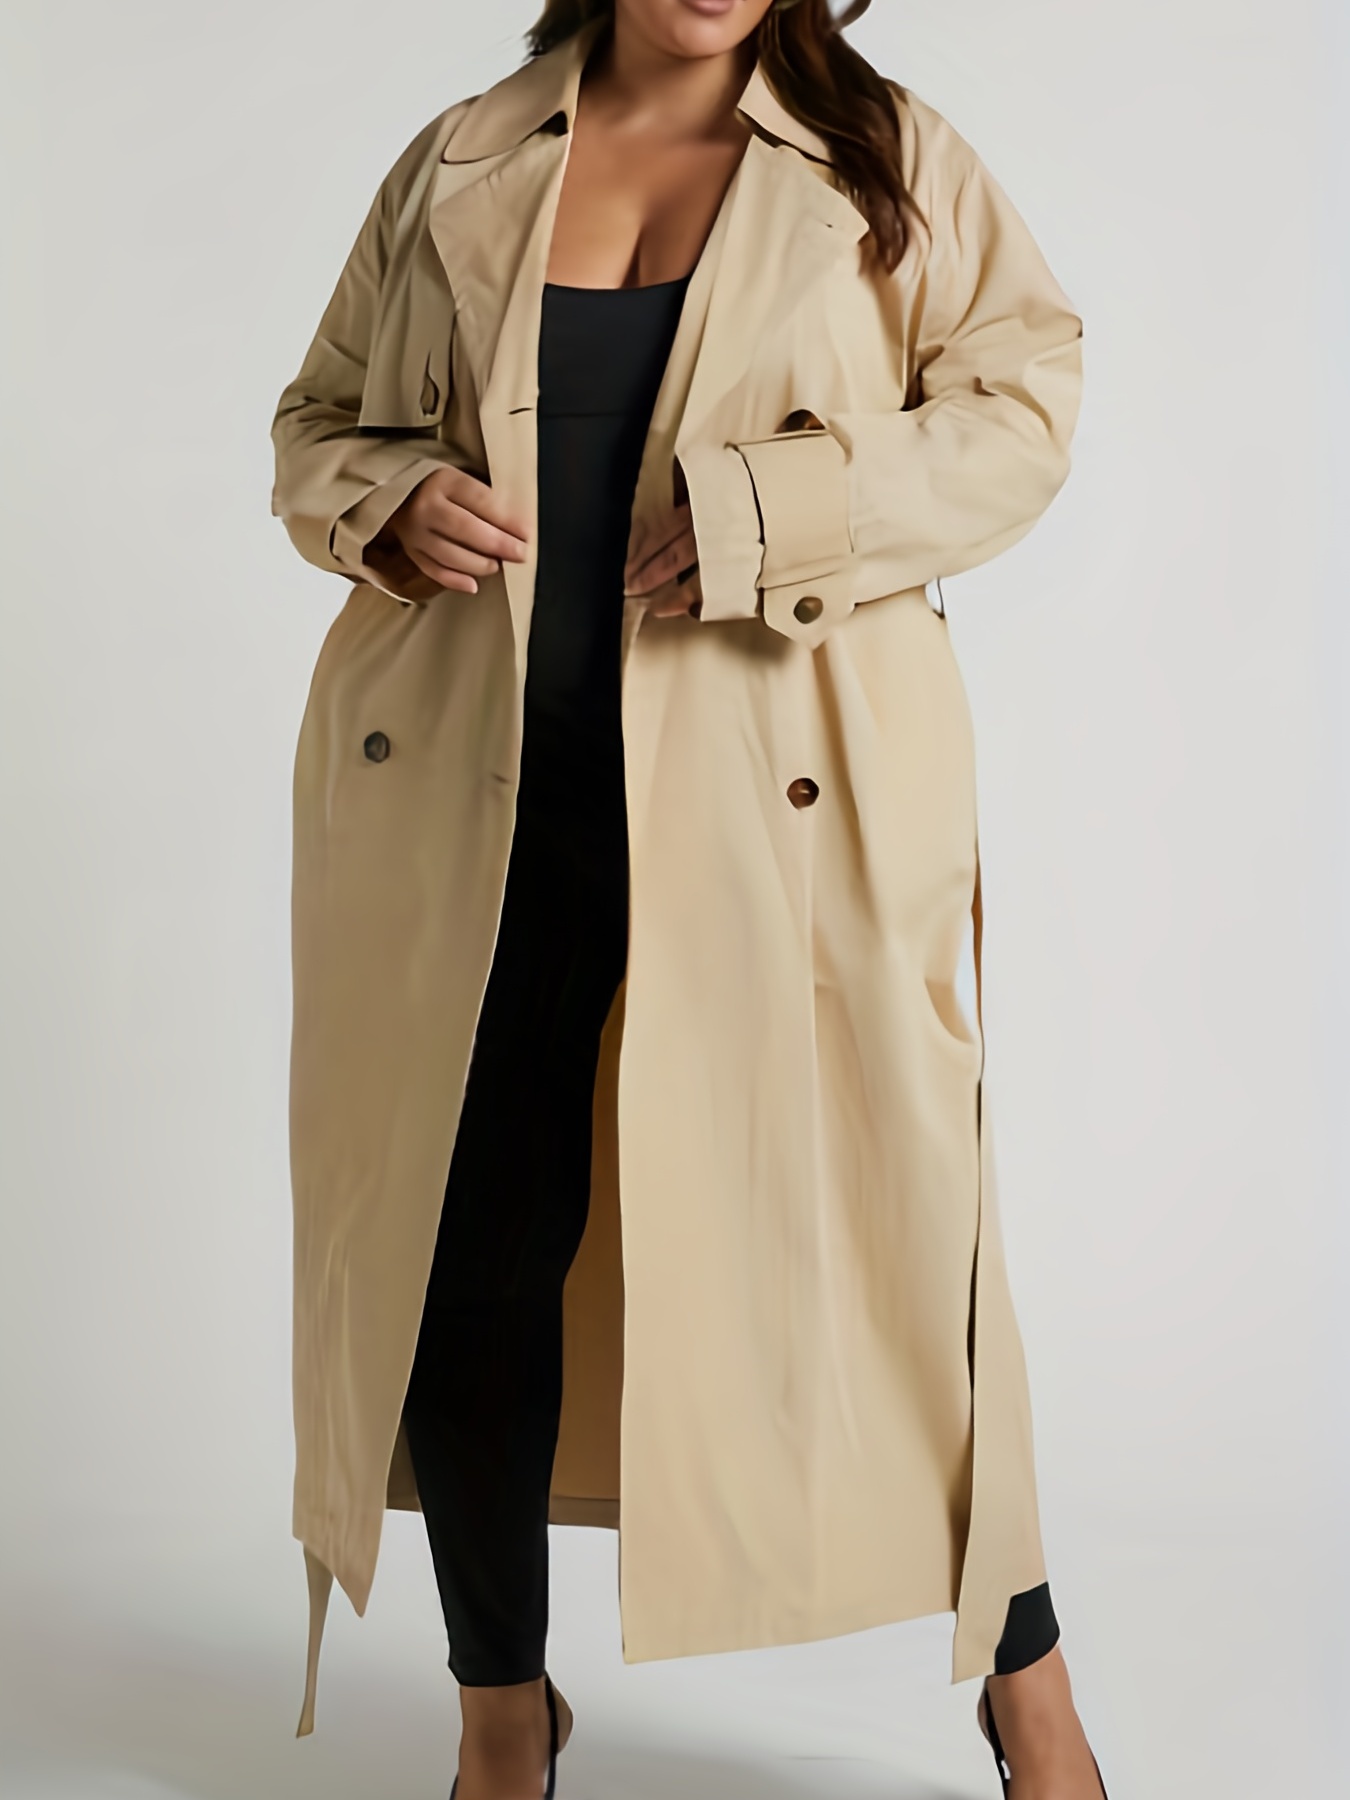 Plus Size Women's Lapel Wool Coat Trench Mid-Length Overcoat